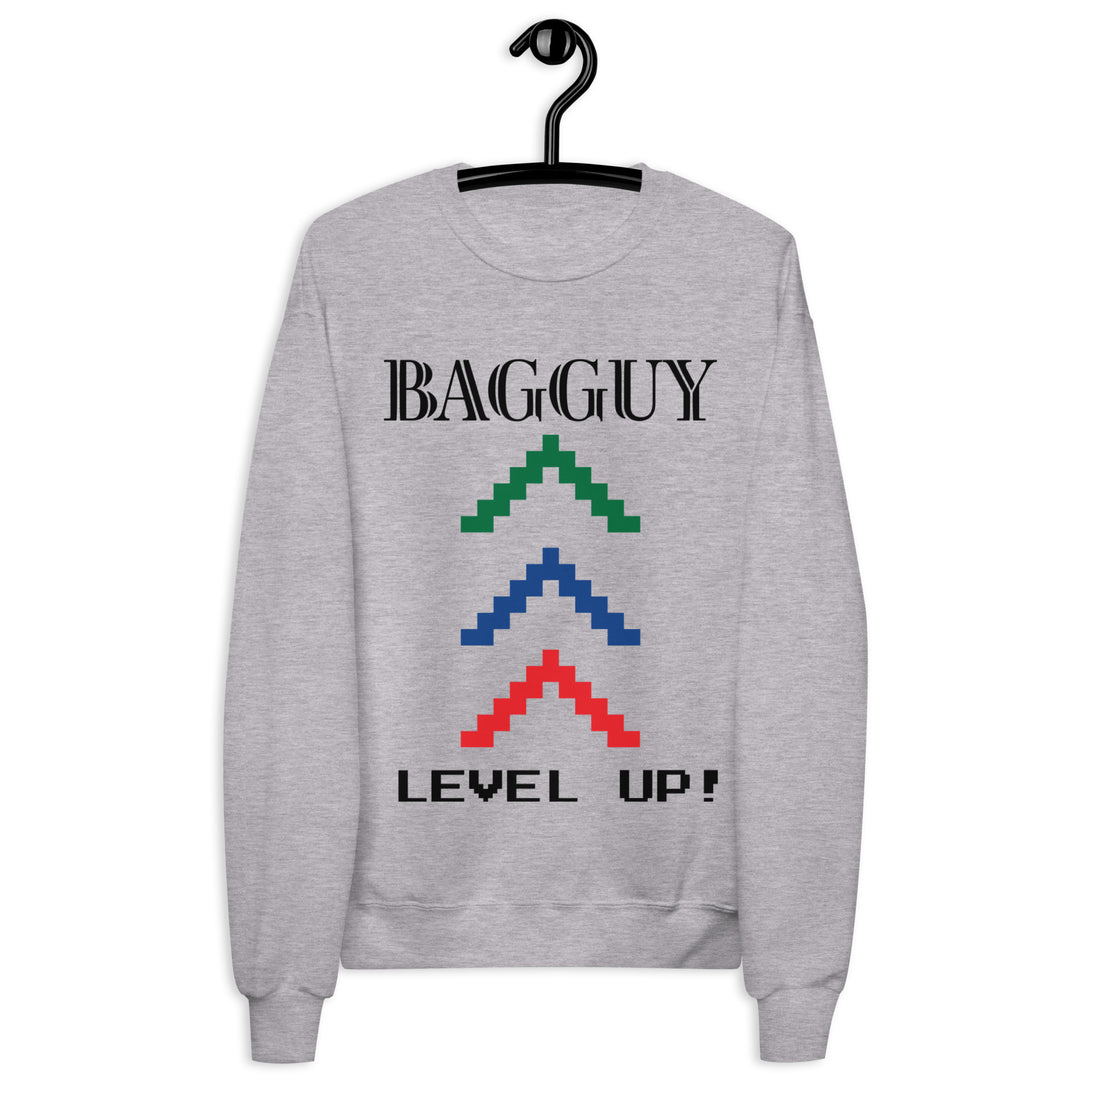 Bagguy- Special Edition Unisex fleece sweatshirt